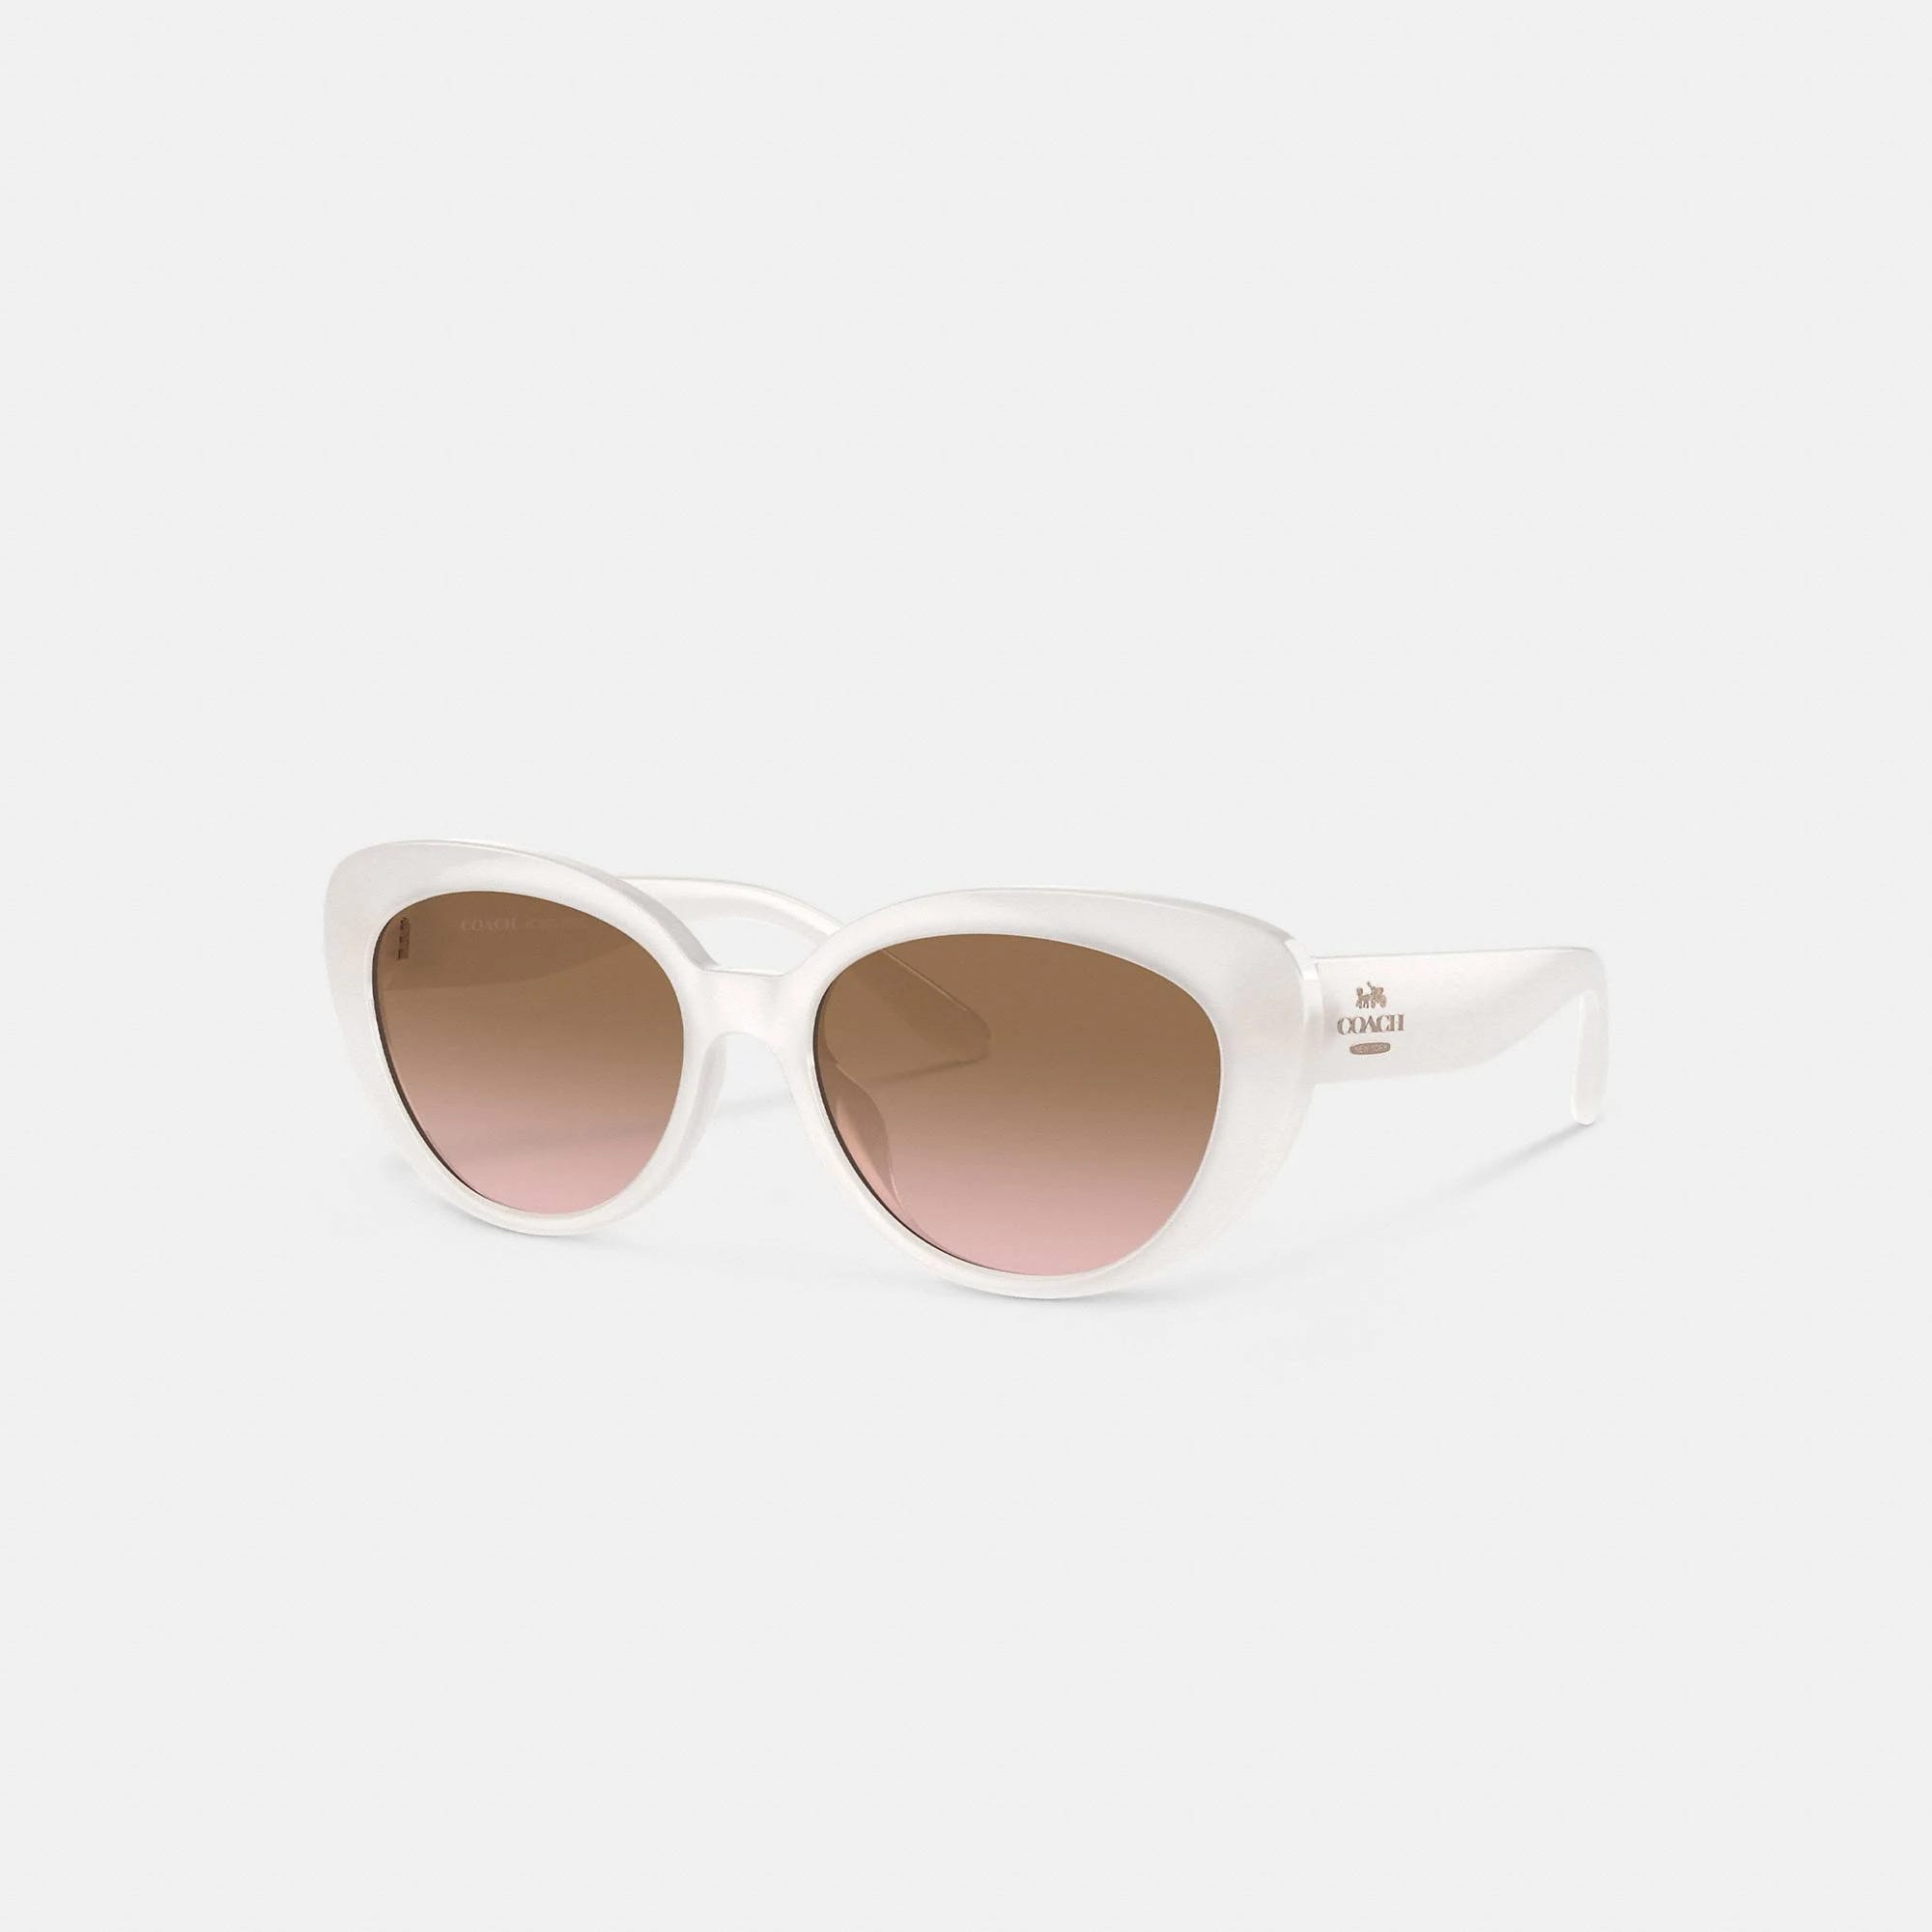 Classic Cat Eye Sunglasses for Women - UV Protection | Image